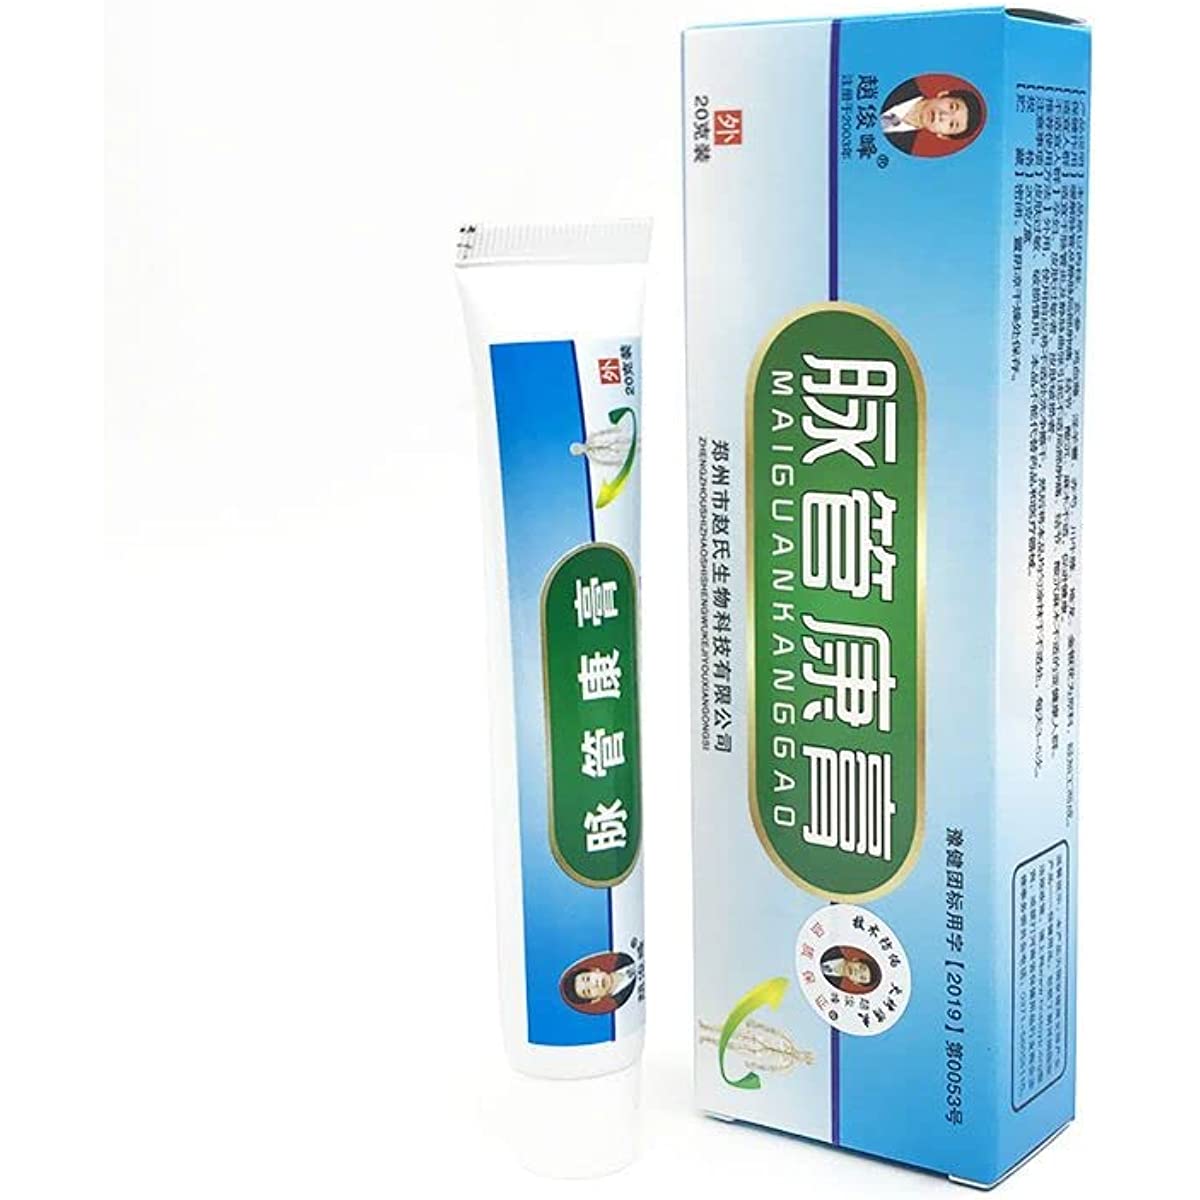 1 Box, Maiguankang Gao 20g/box 脉管康膏